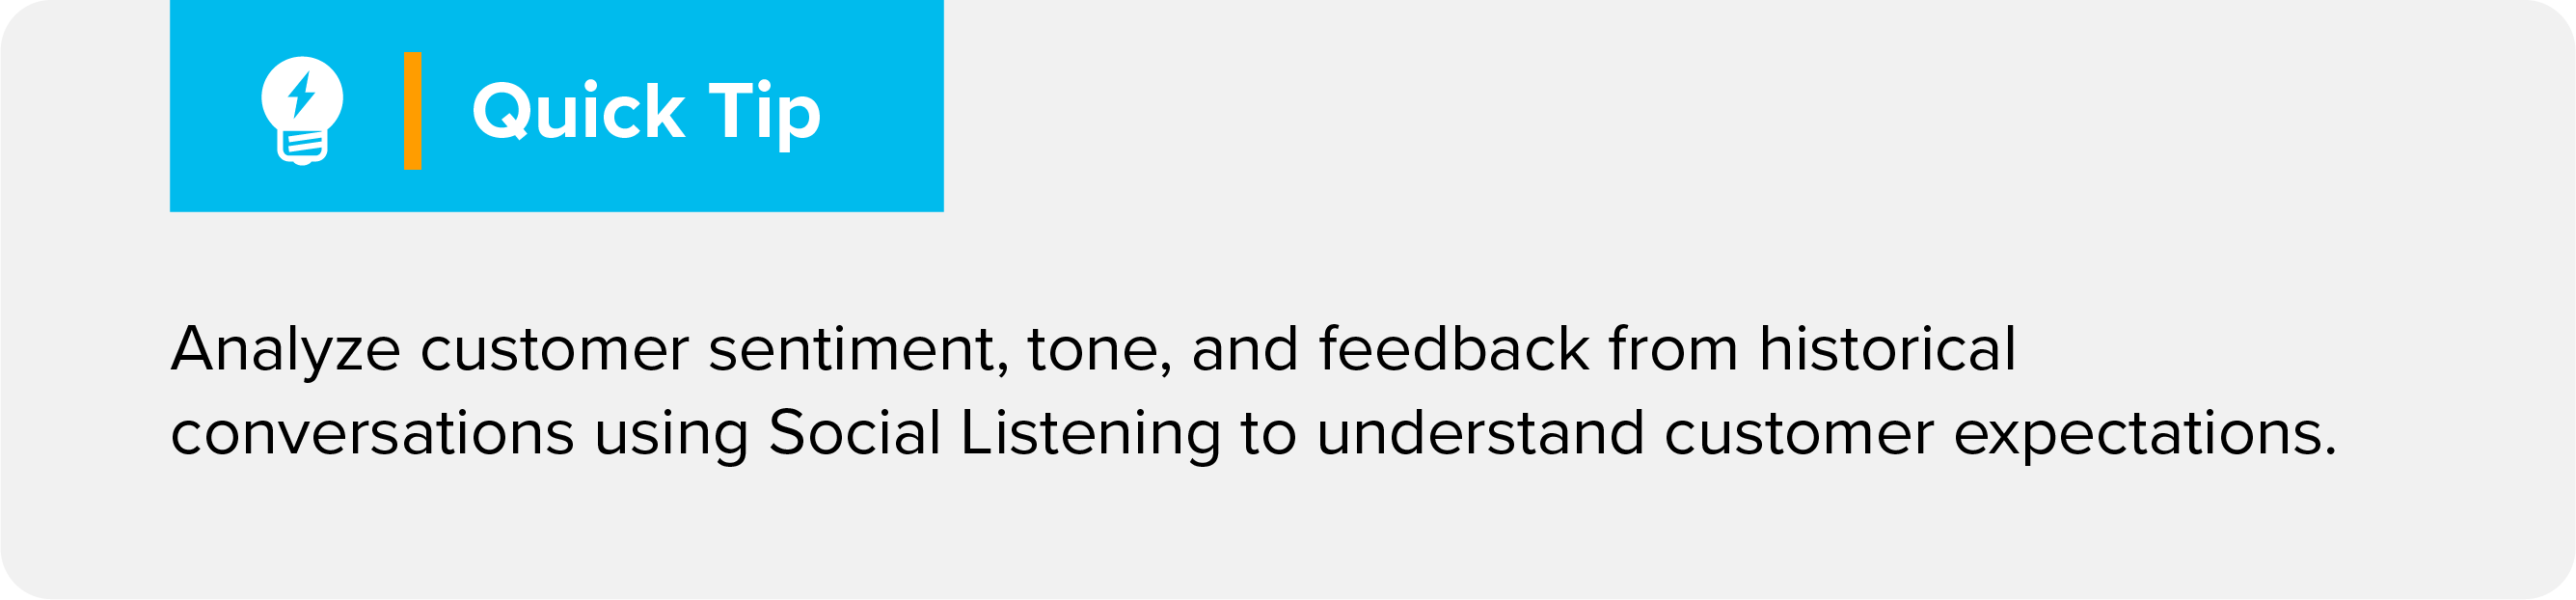 Understand customer sentiment and feedback using Social Listening.